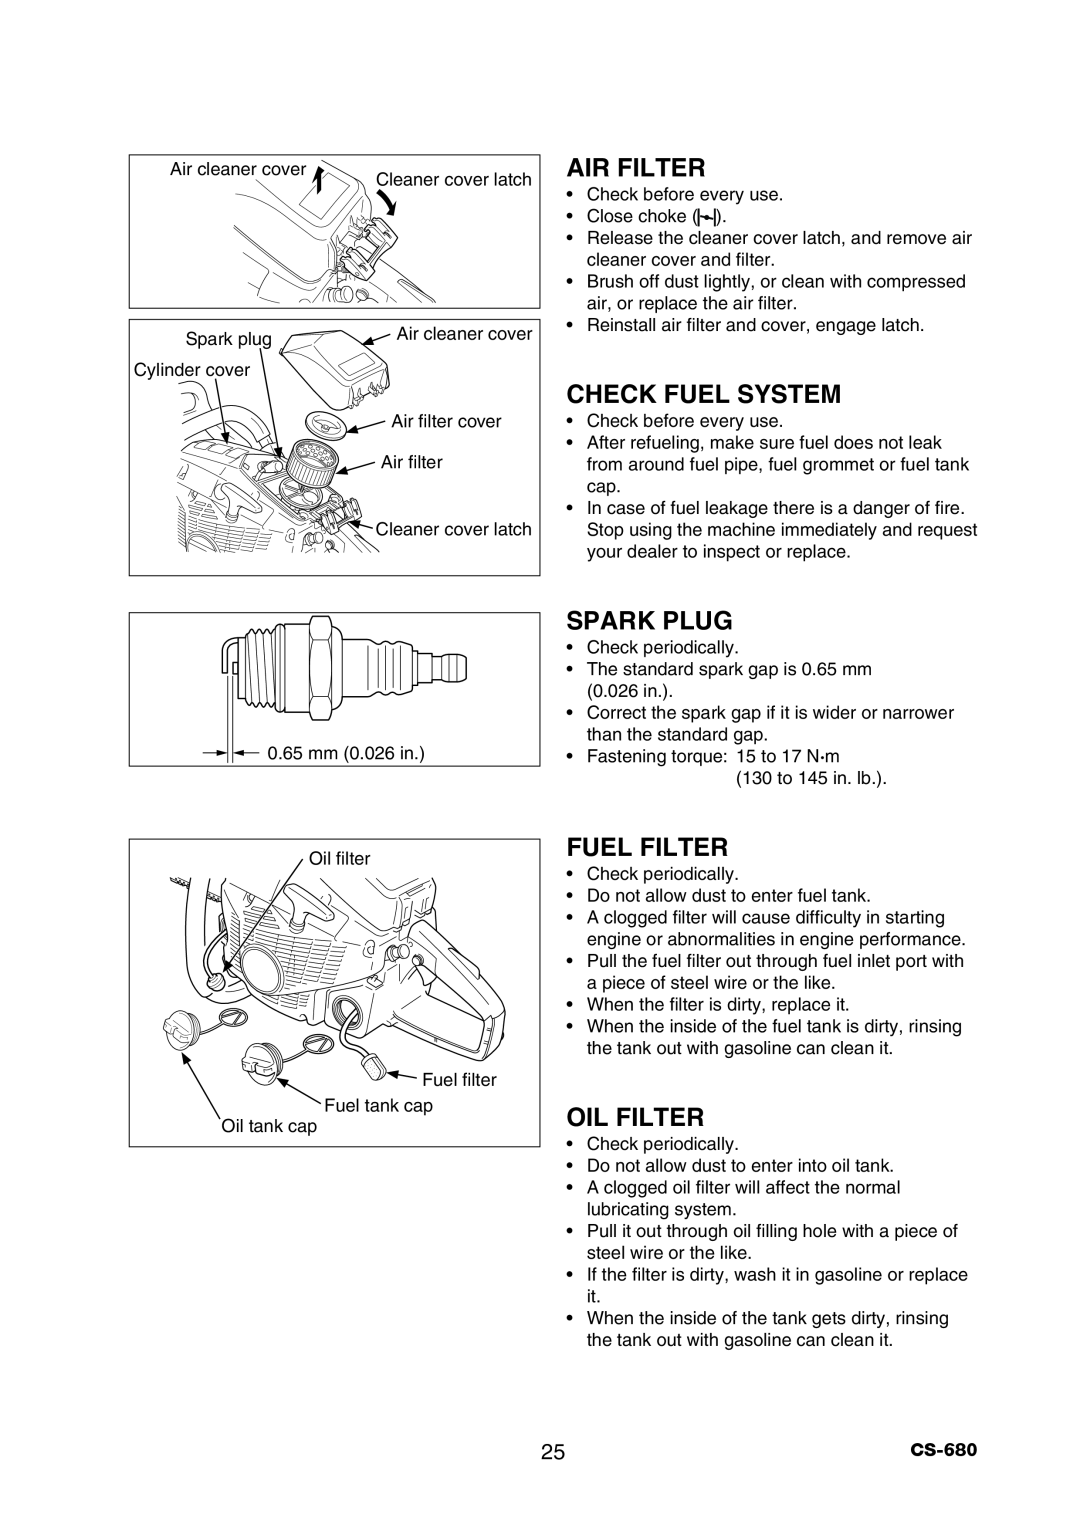 Echo CS-680 instruction manual Air Filter, Check Fuel System, Spark Plug, Fuel Filter, Oil Filter 